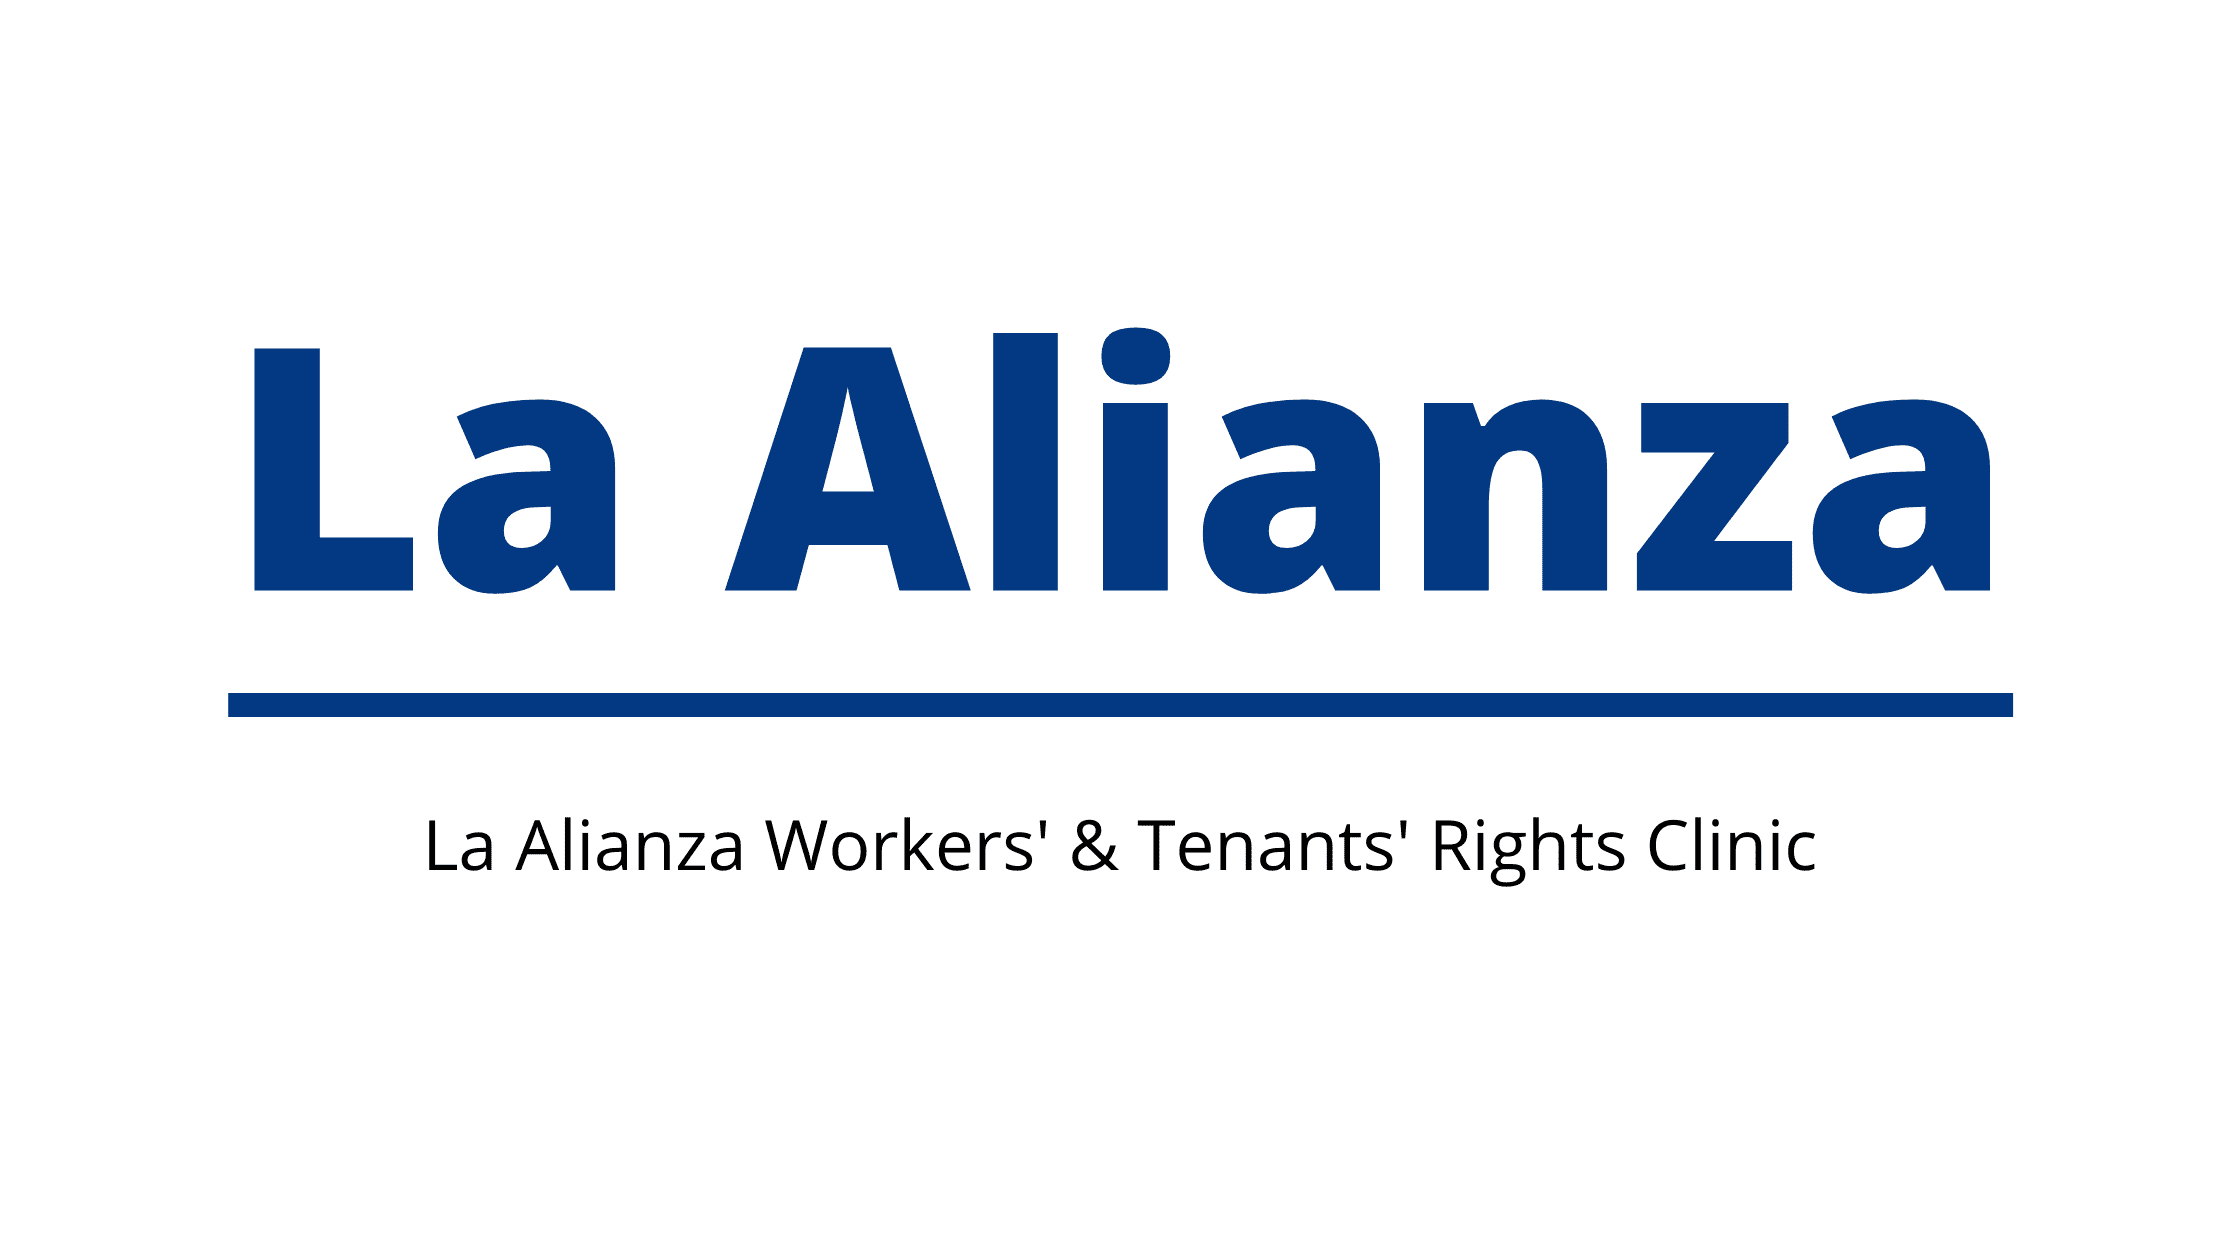 La Alianza - La Alianza Workers' & Tenants' Rights Clinic